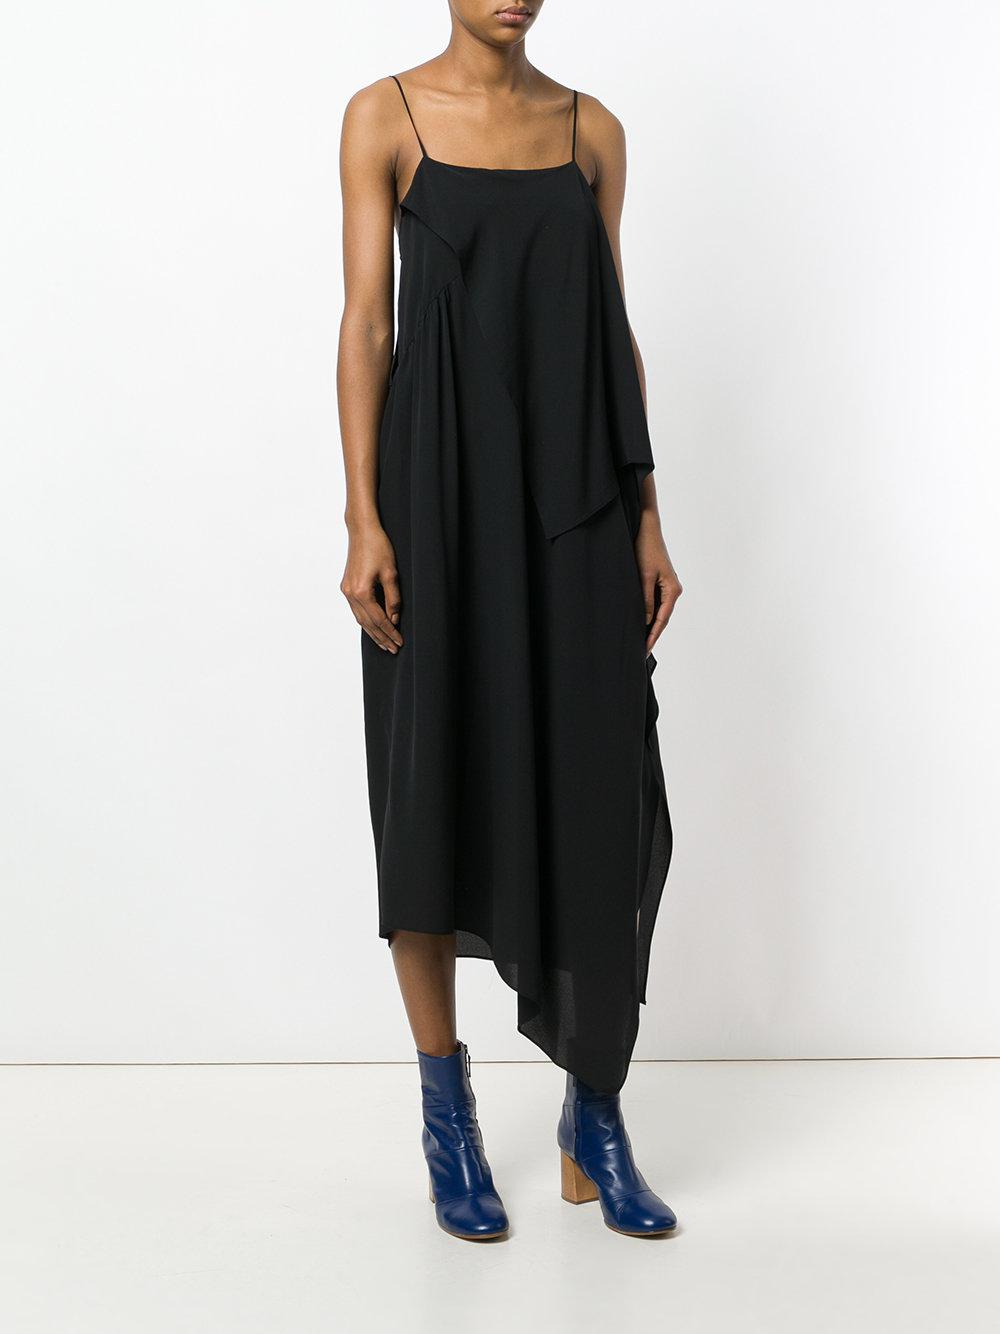 Christian Wijnants Silk Asymmetrical Hem Layered Dress in Black - Lyst